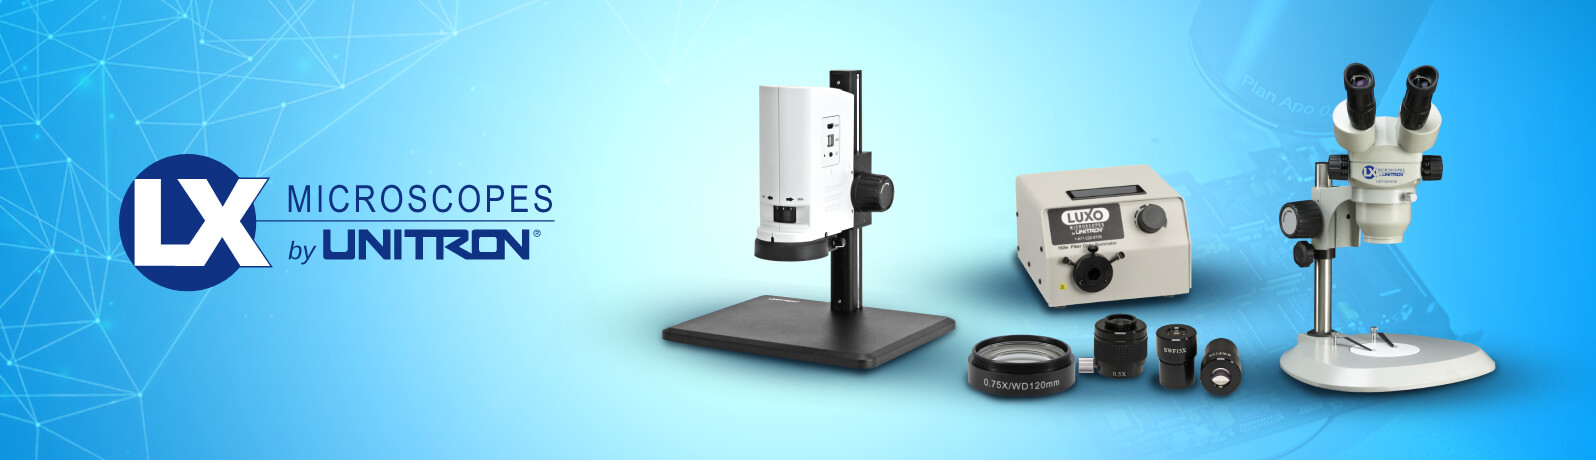 LX Microscopes